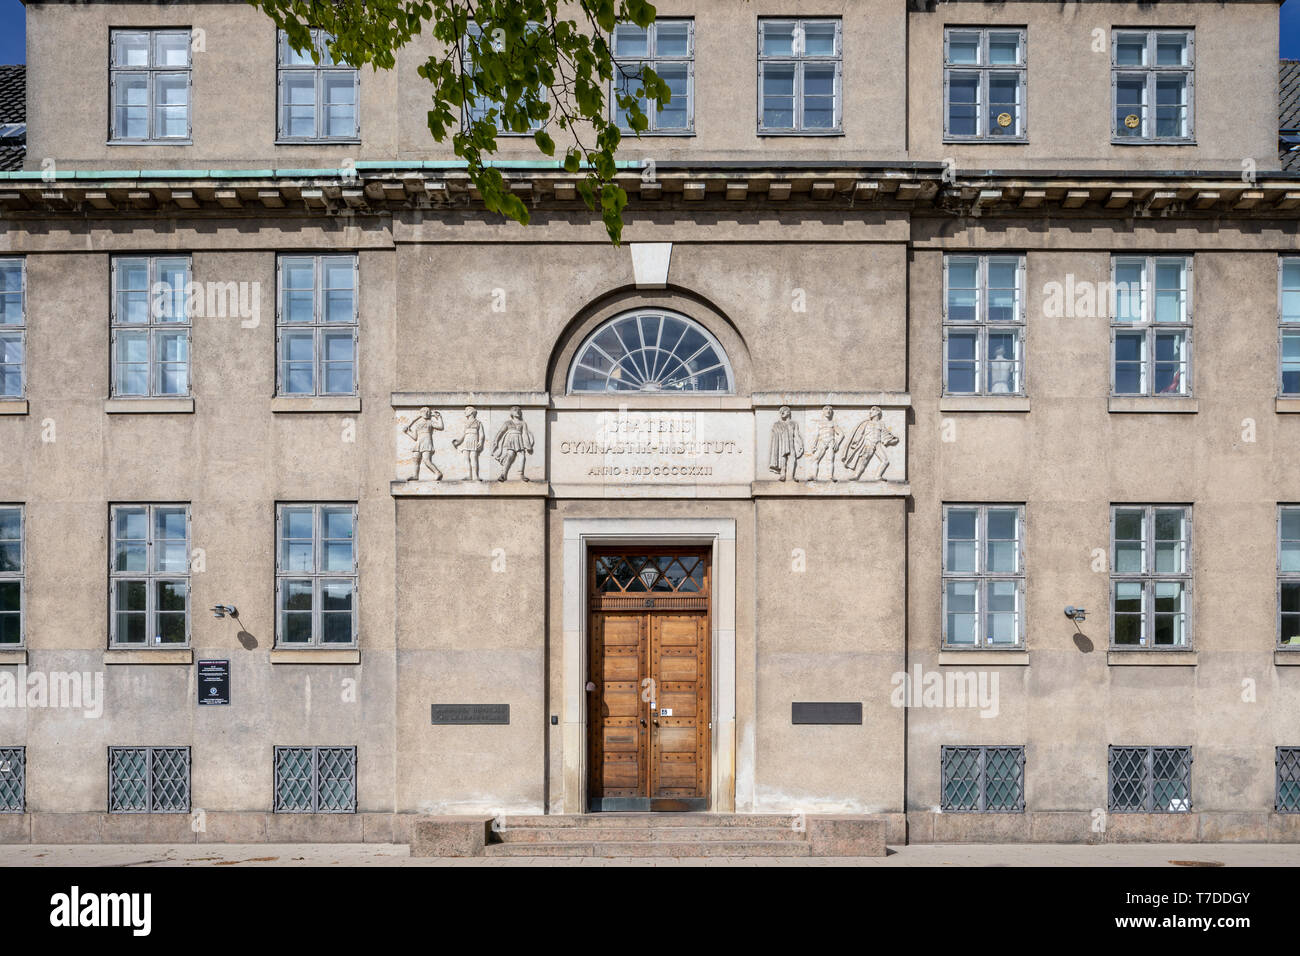 Institut for Idræt og Ernæring (Institute of Sports and Nutrition), North Campus, facade, building designed by Carl Brummer, 1924; Copenhagen, Denmark Stock Photo